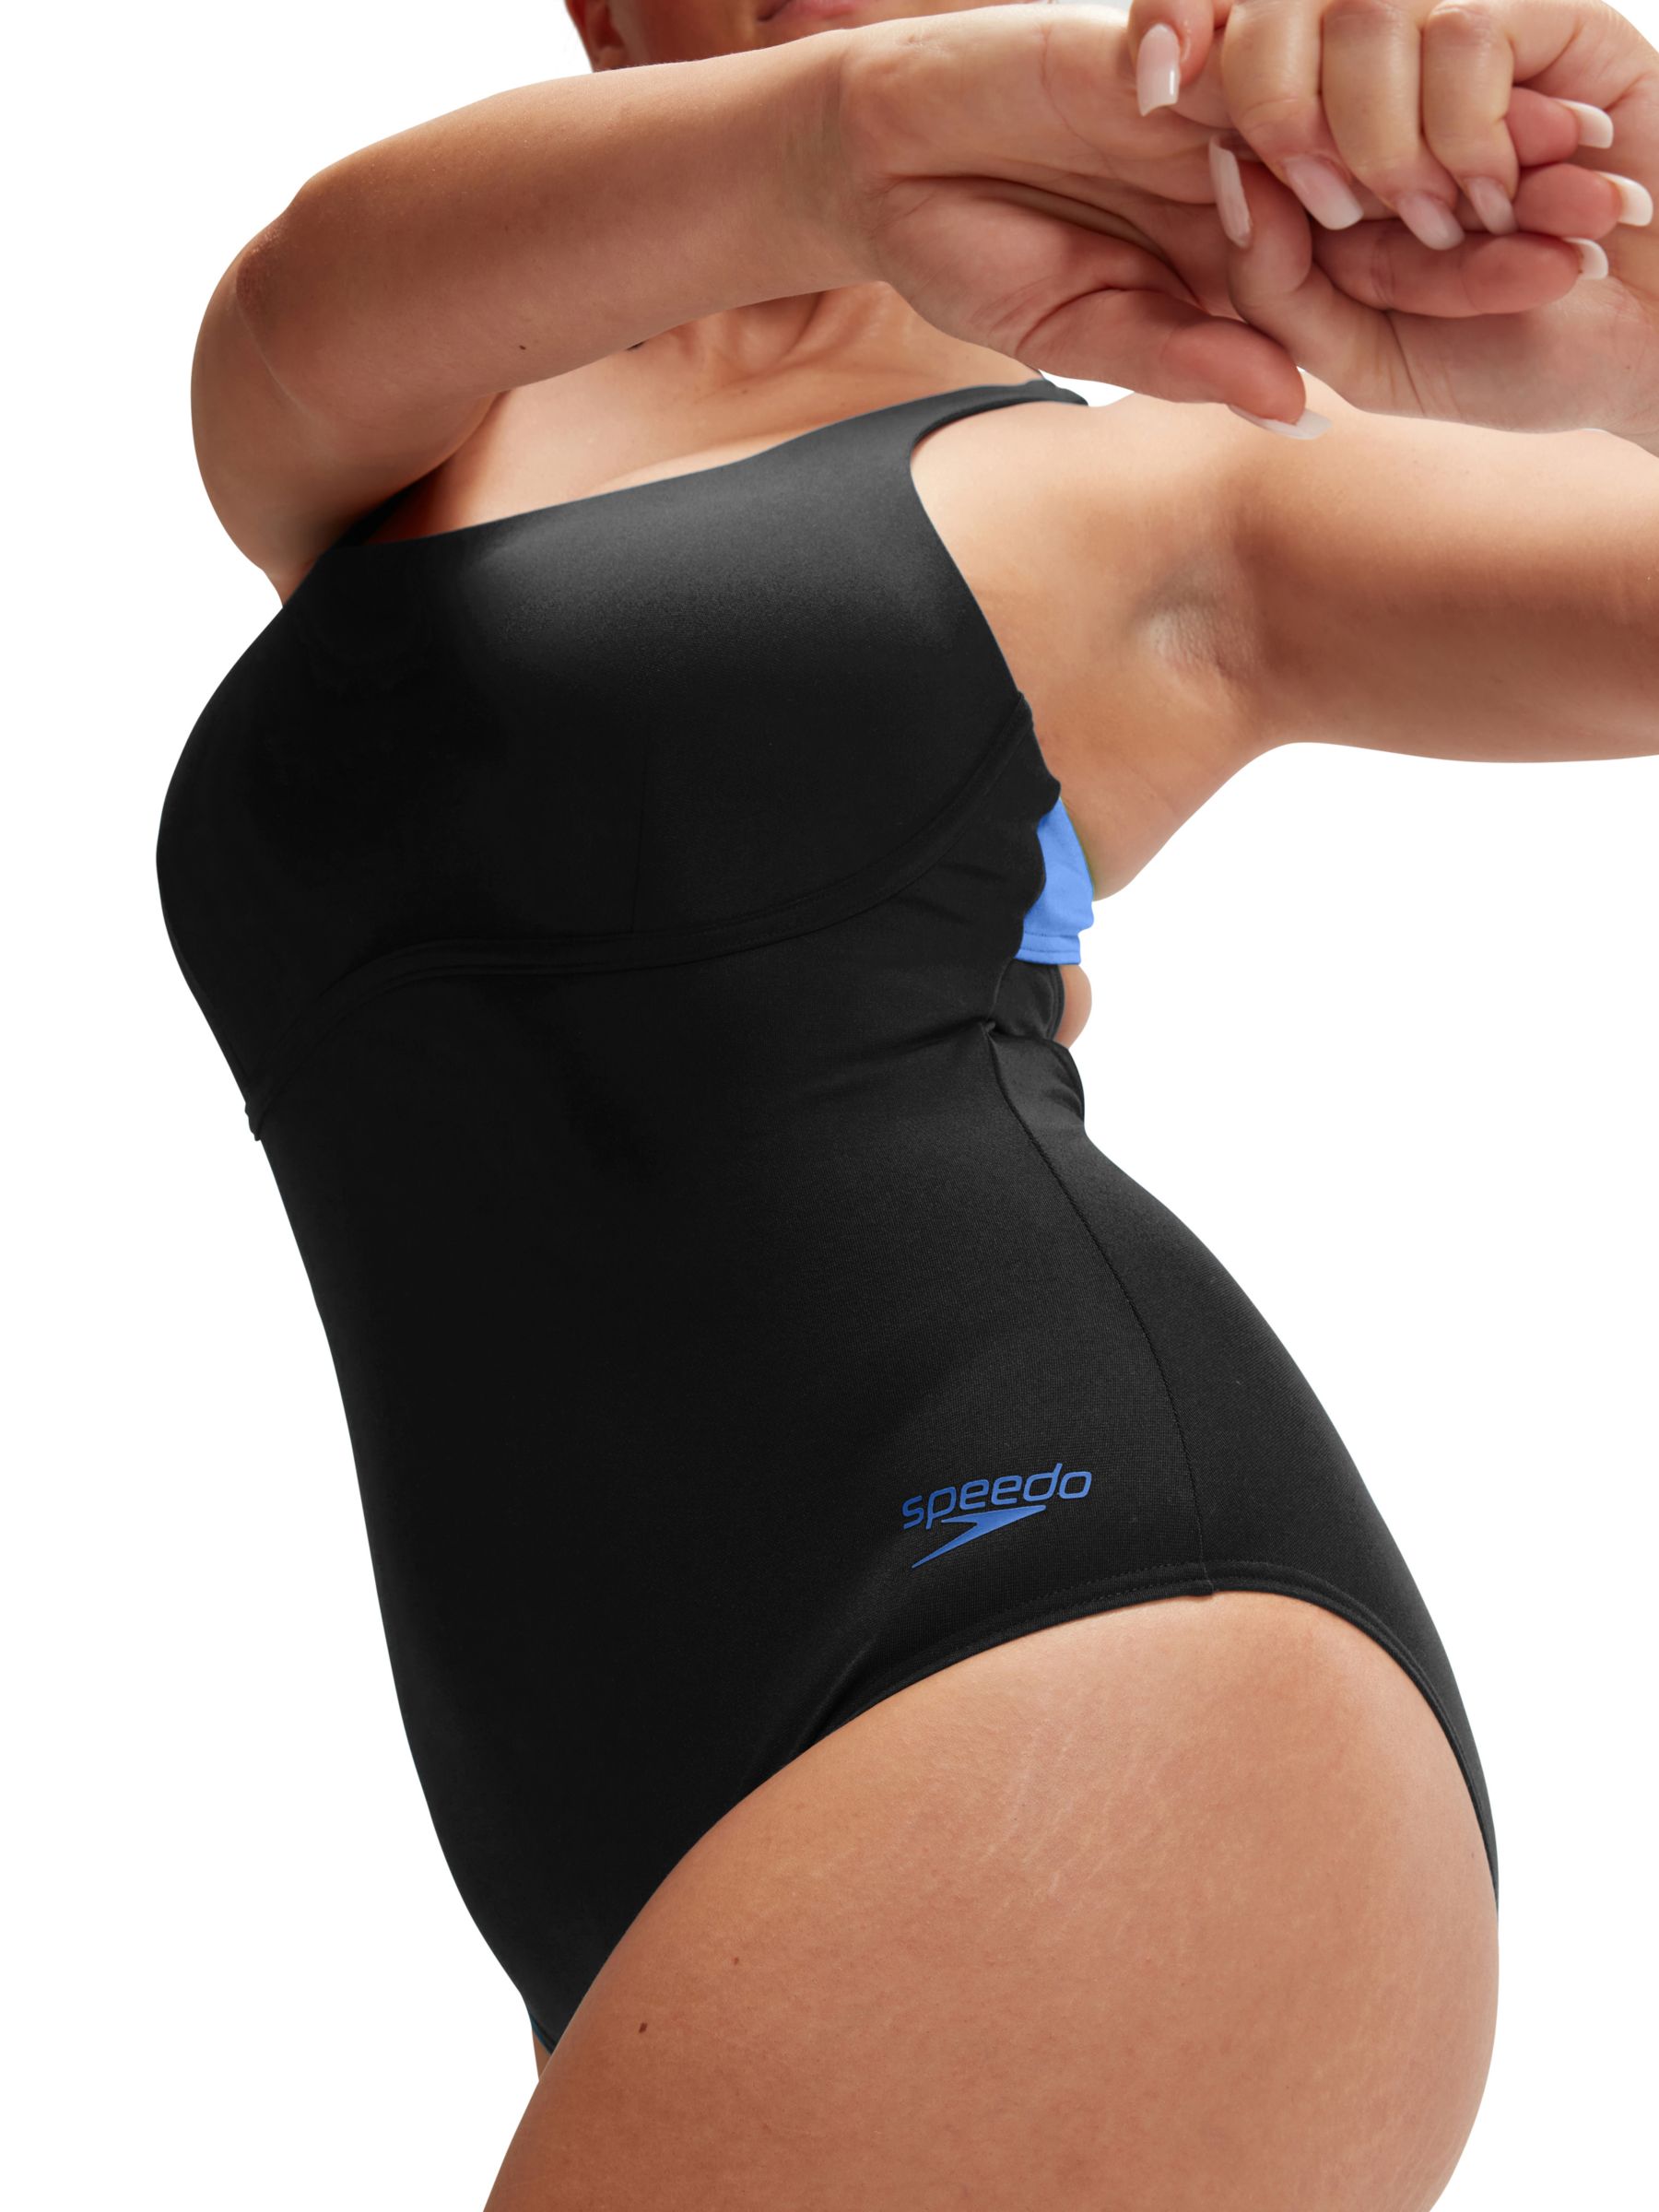 Speedo Womens Flex Band Swimsuit with Integrated Swim Bra - Dark